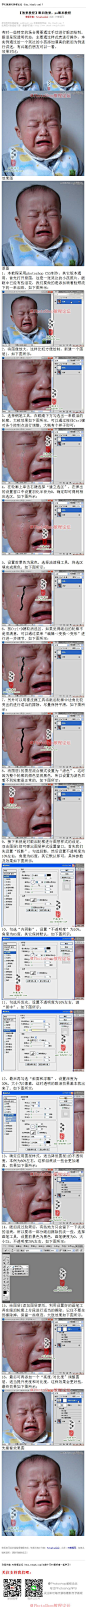 《ps眼泪教程》 有时一些特定的场合需要通过手动进行眼泪绘制，眼泪呈现透明状态，主要通过样式表进行操作，本实例通过给一个哭泣的小孩添加逼真的眼泪为例进行讲述，有兴趣的朋友可以一看。 #www.16xx8.com##ps##photoshop##教程##ps教程##I眼泪效果I#：http://www.16xx8.com/plus/view.php?aid=112261&pageno=all